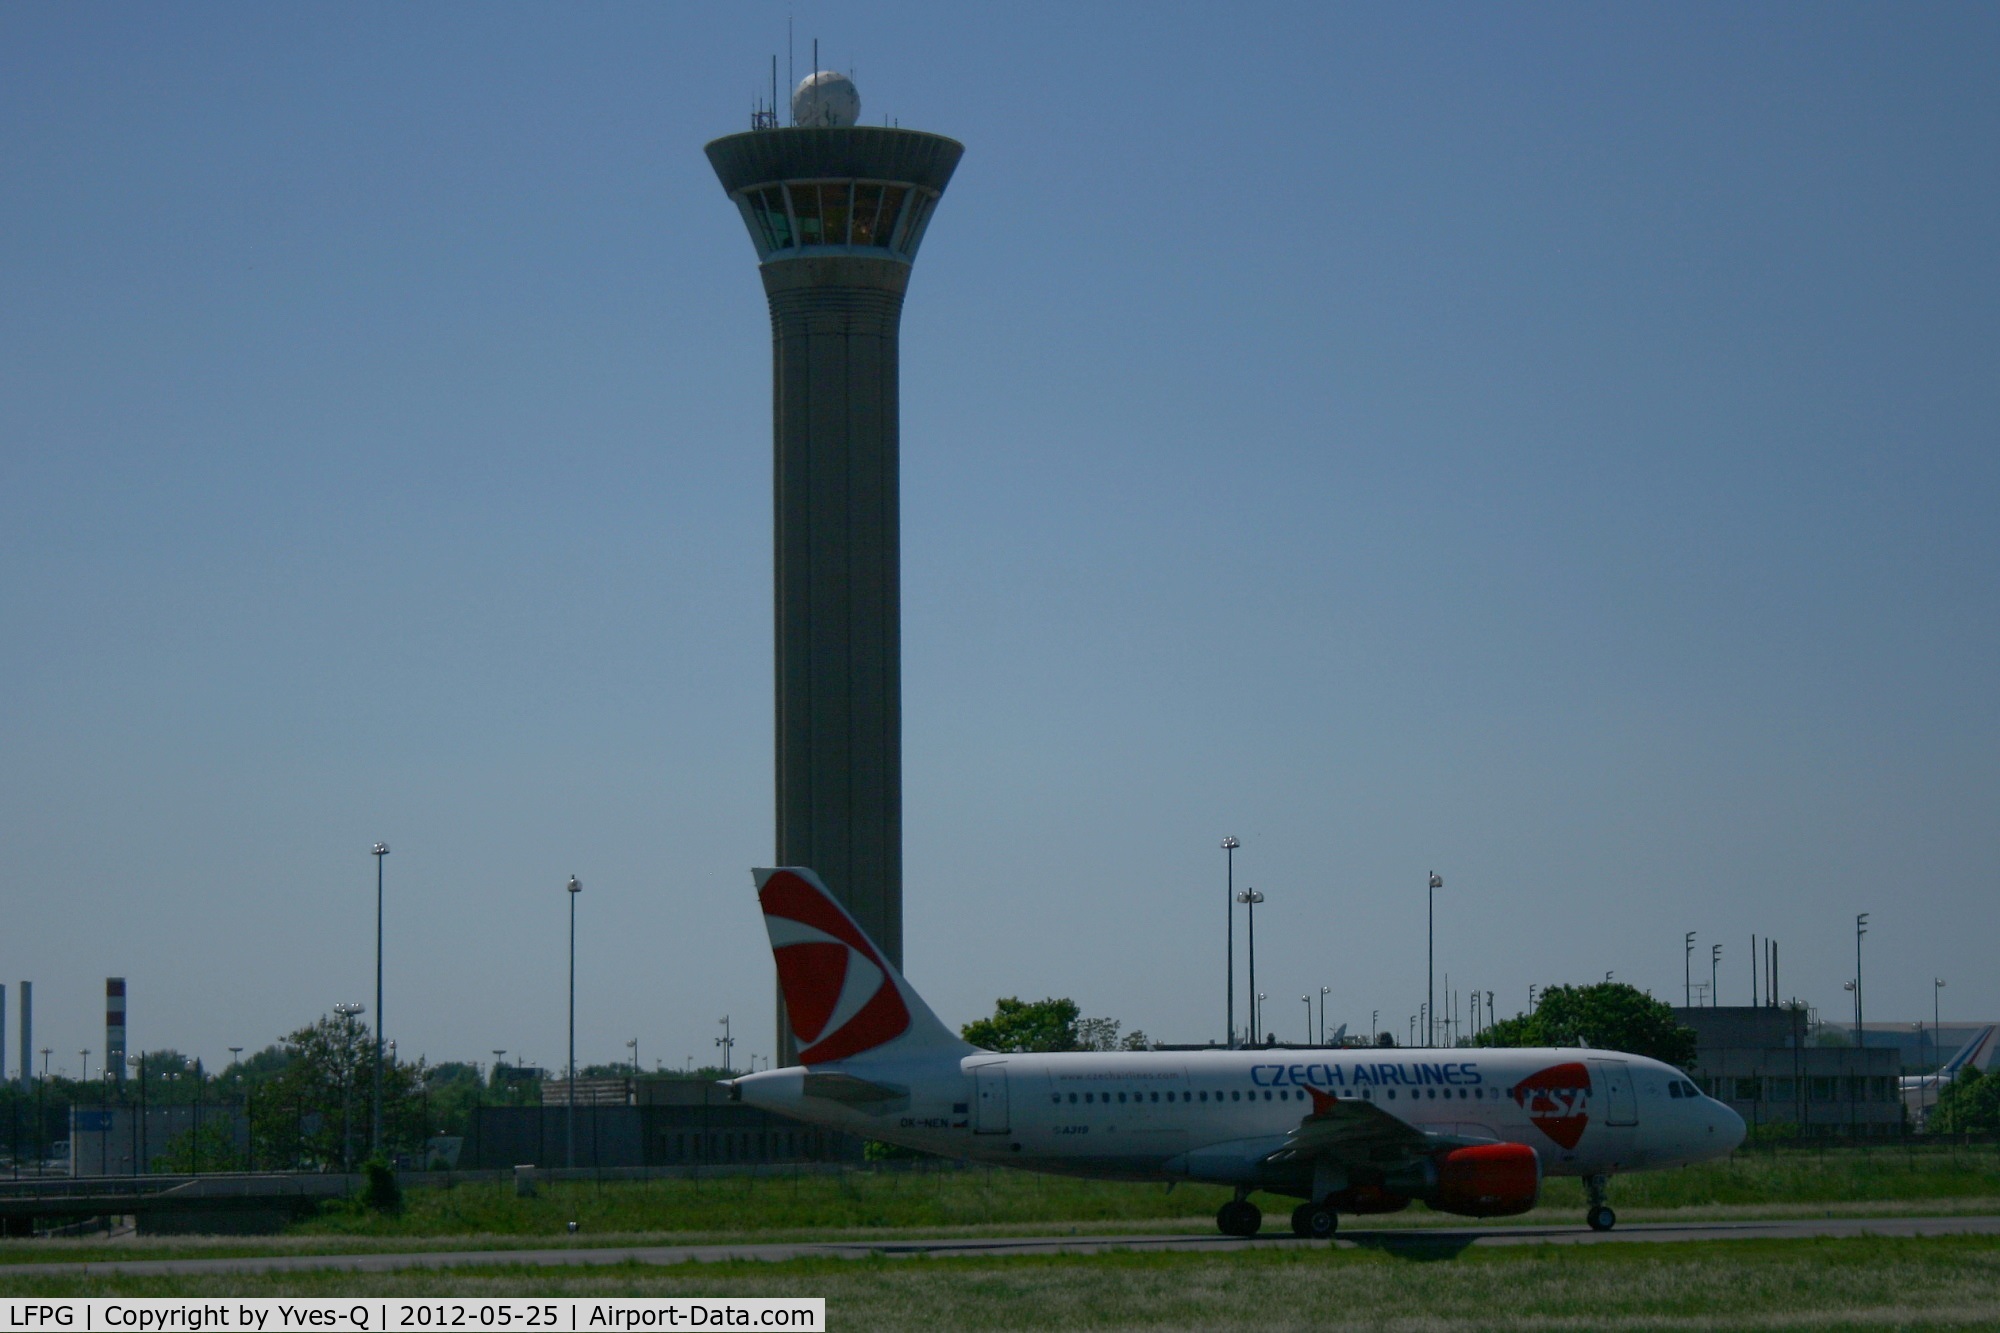 Paris Charles de Gaulle Airport (Roissy Airport), Paris France (LFPG) - Control Tower, Paris Charles De Gaulle Airport (LFPG-CDG)